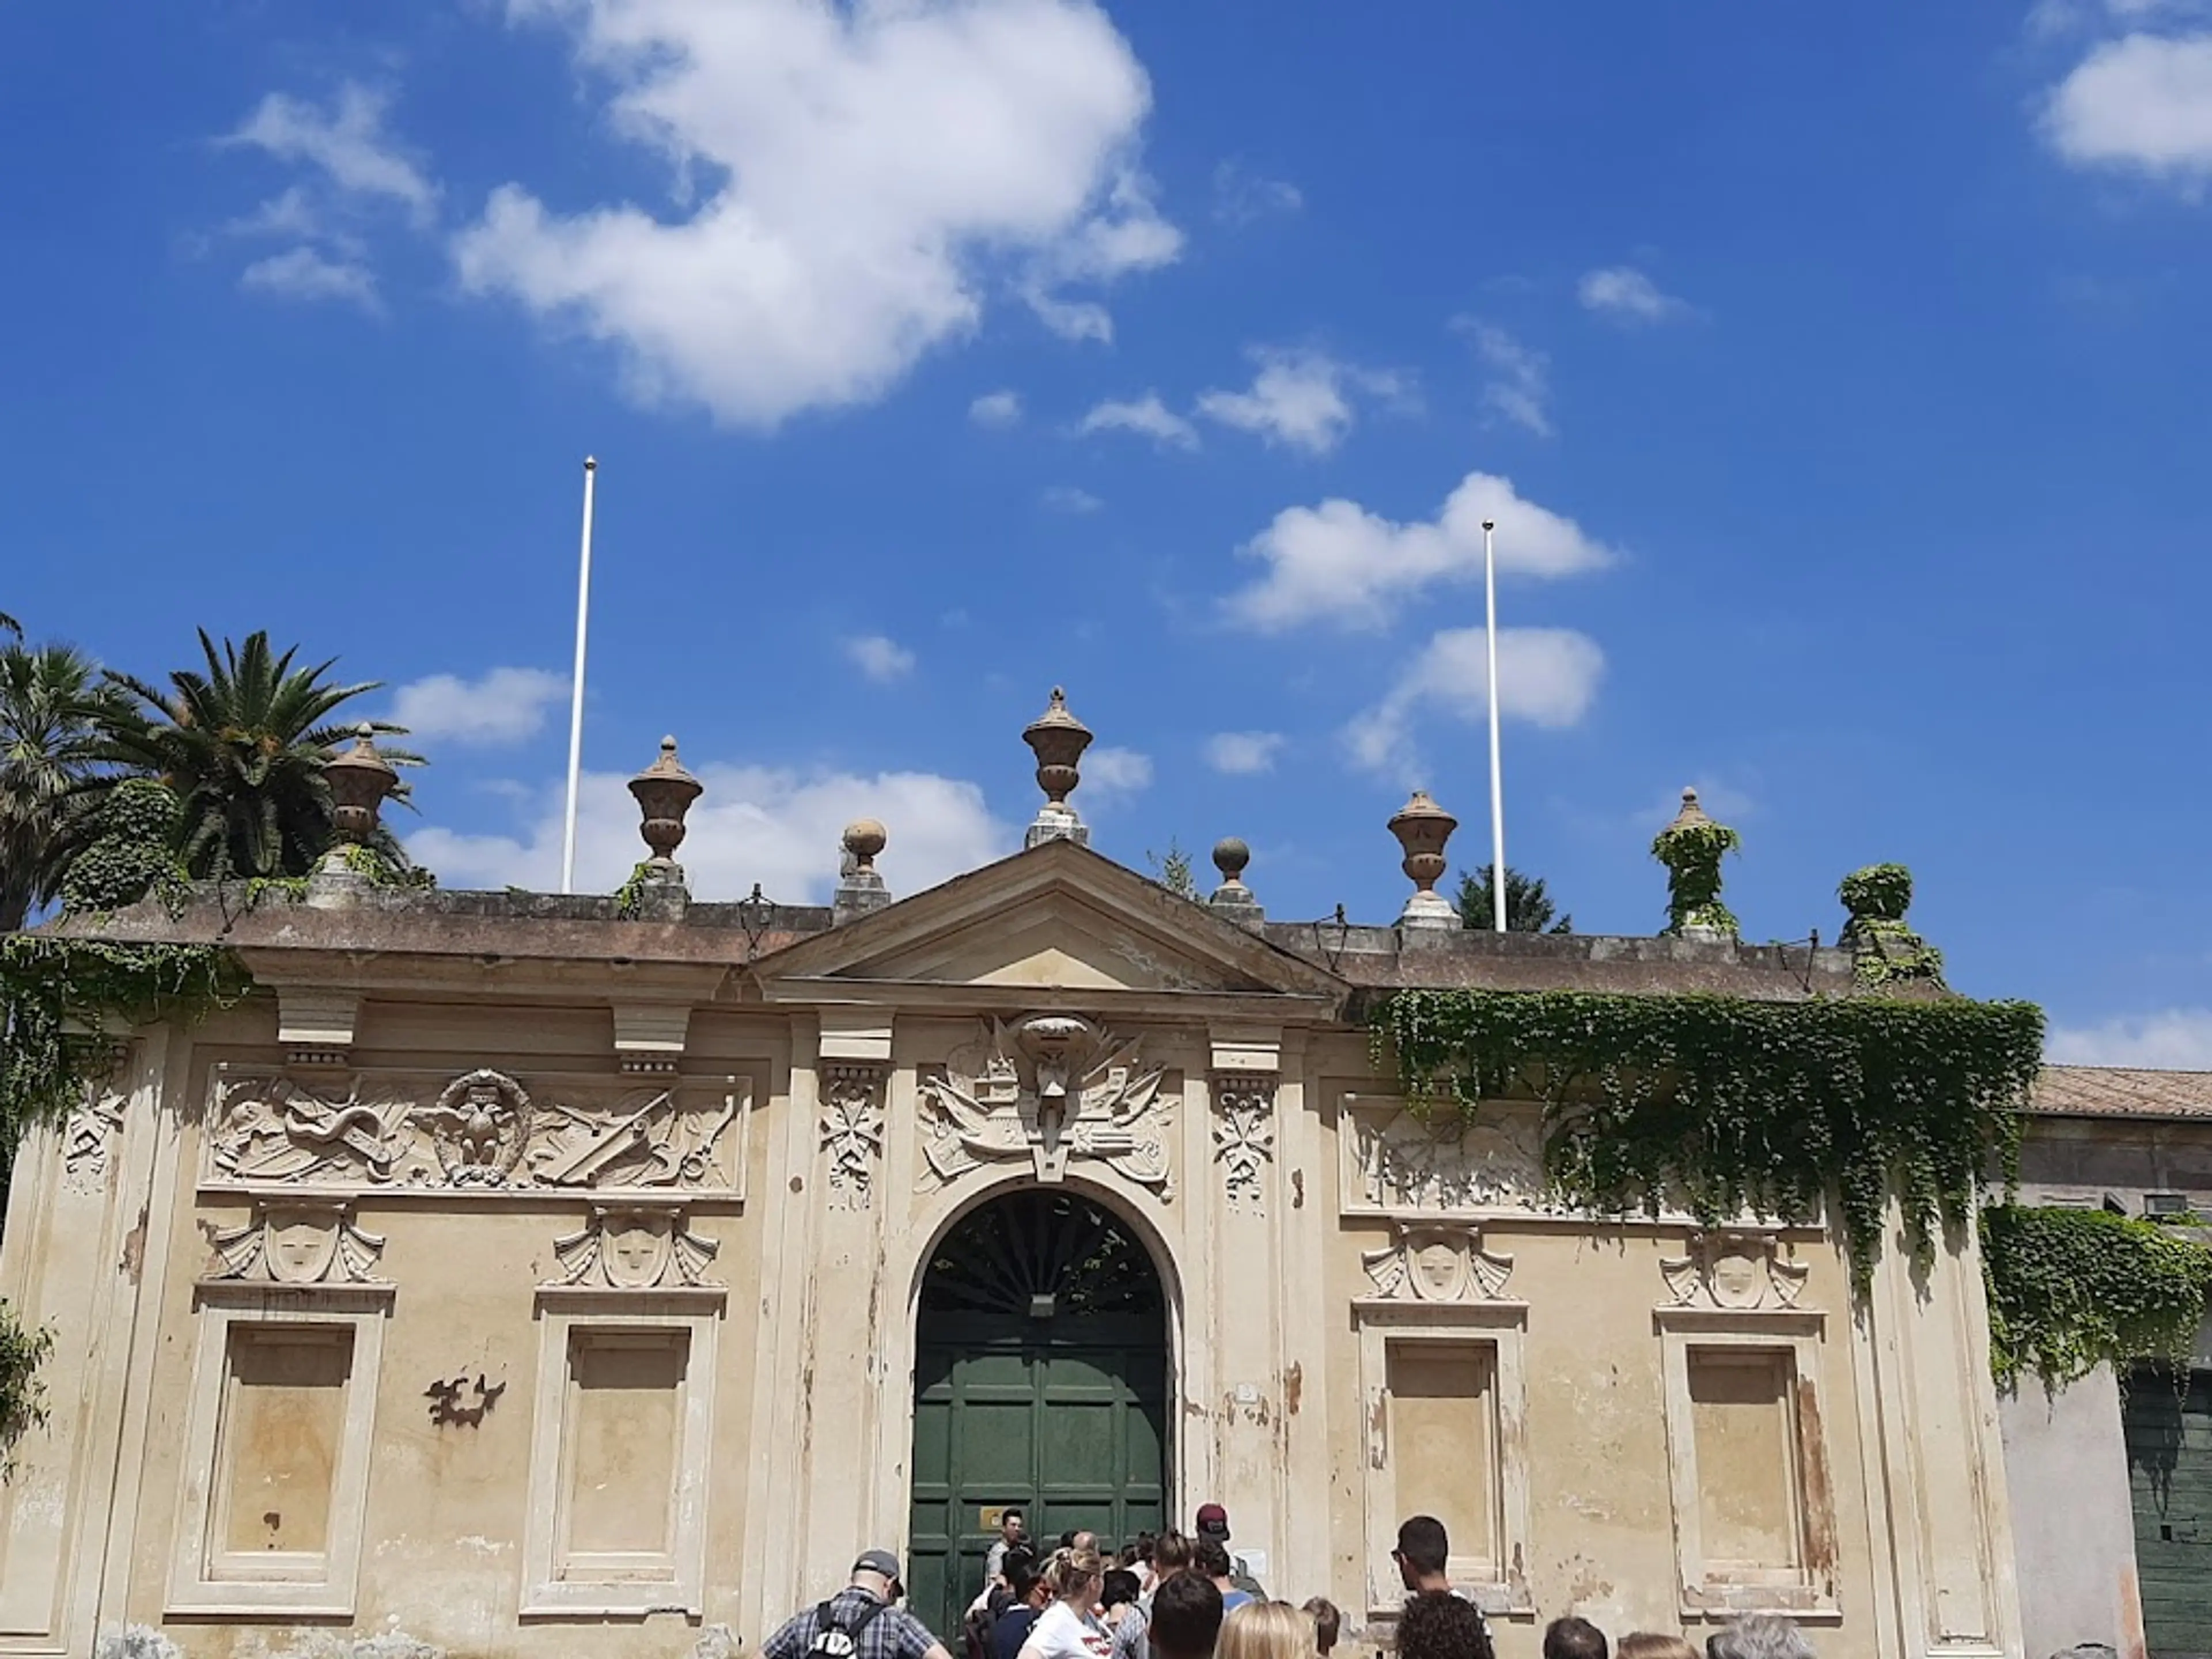 Knights of Malta's gate